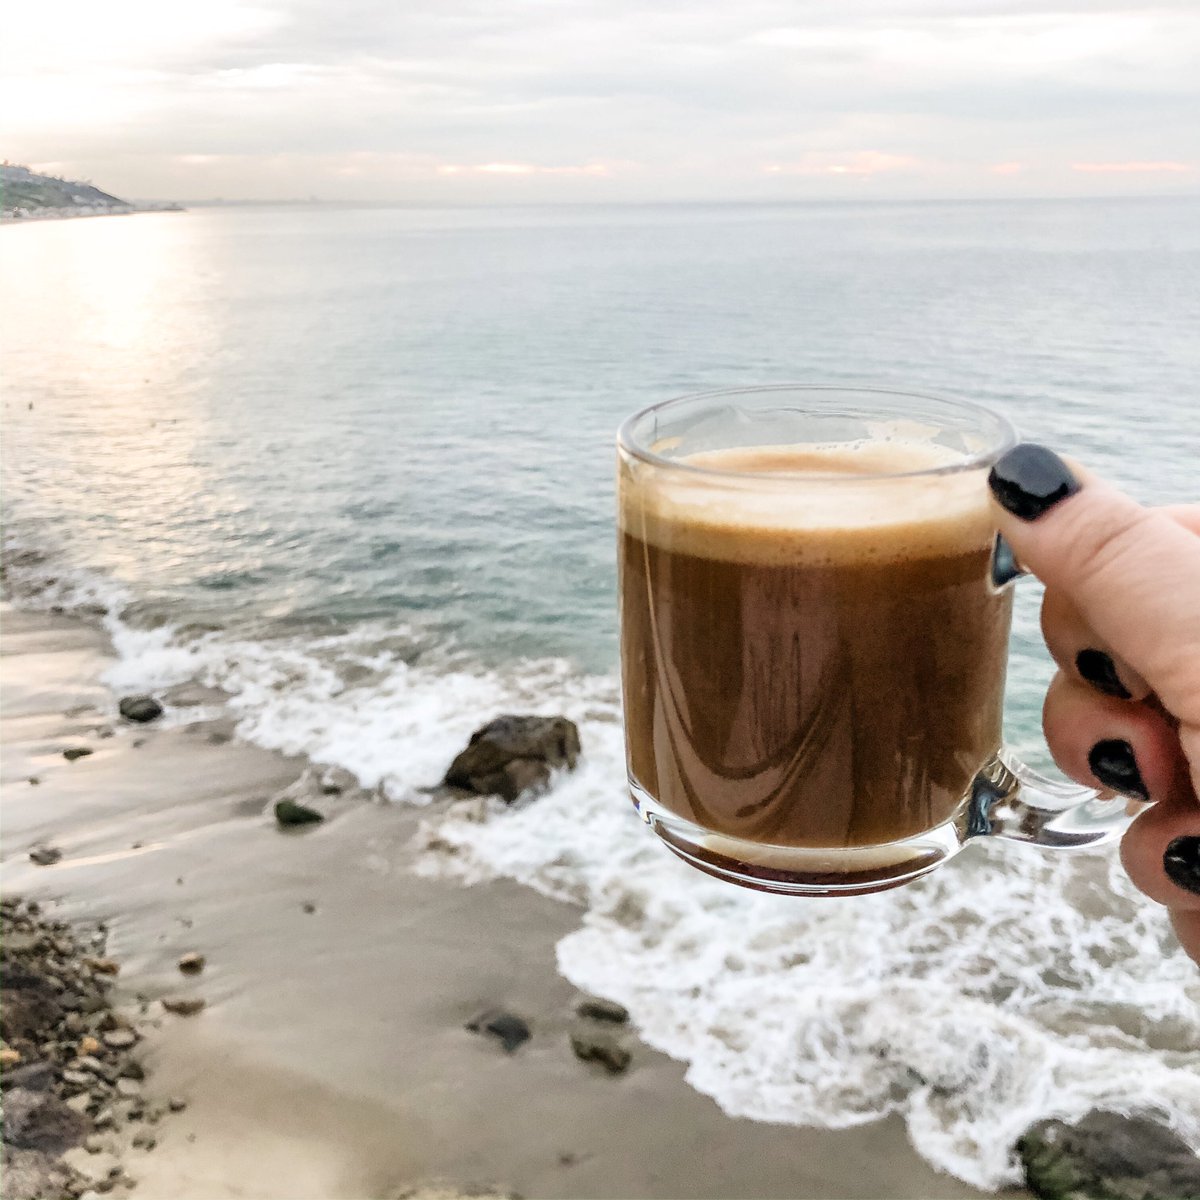 Good morning from Malibu. ❤️🌊  #malibu #malibumoment #malibubeachinn #carbonbeach #socal #morningvibes #morningwaves #morningcoffee #malibuca #malibucalifornia #sunrise #malibusunrise #blogger #travelblogger #lifestyleblogger